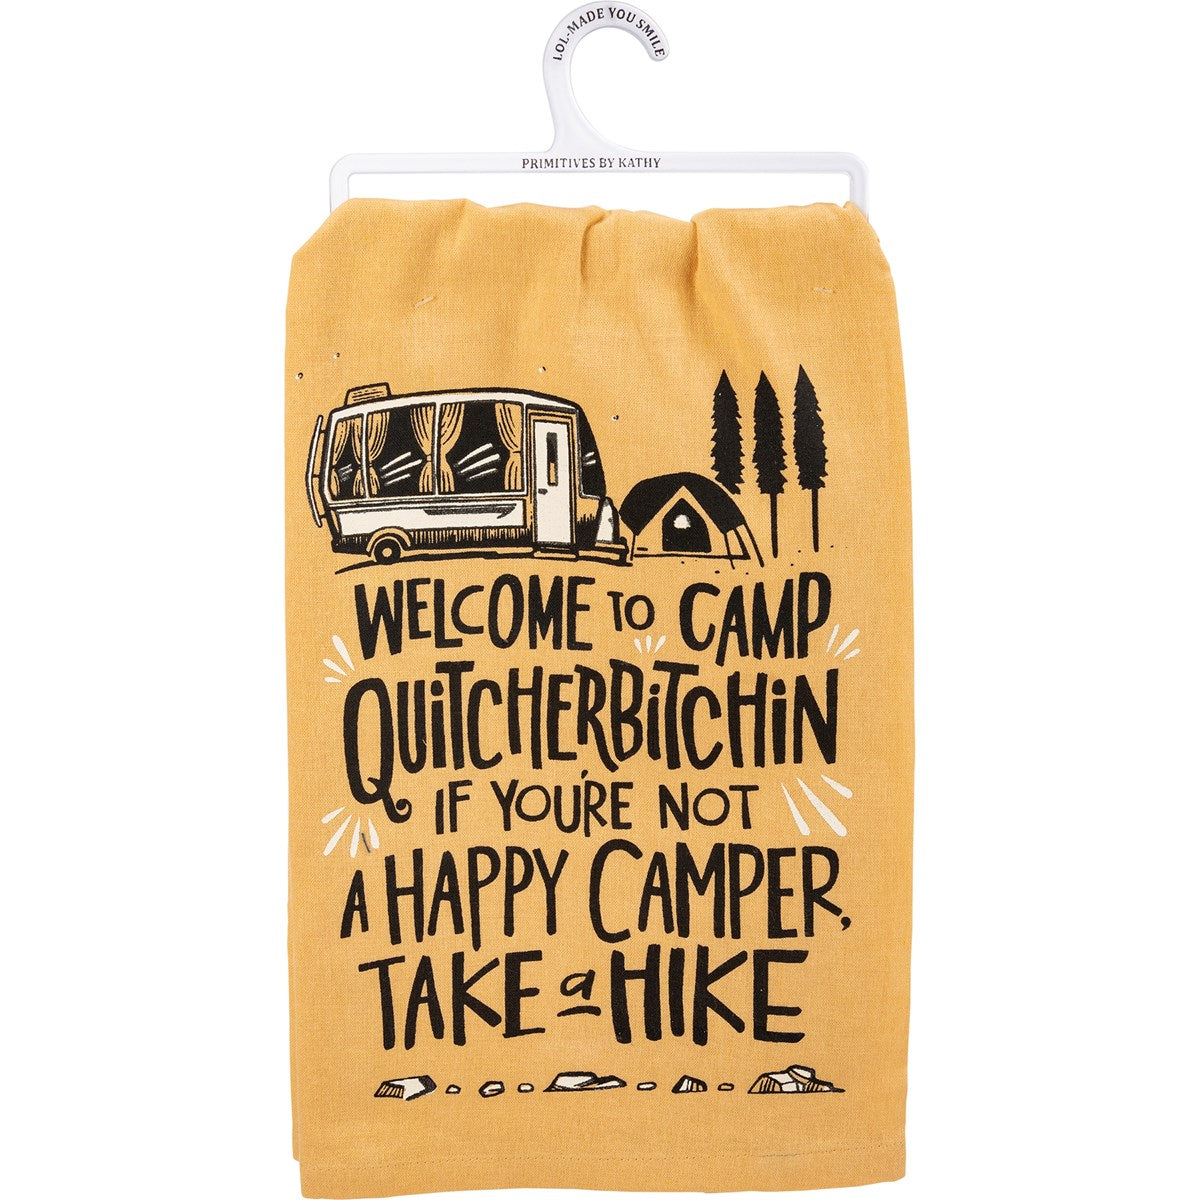 "WELCOME TO CAMP QUITCHERBITCHIN" DISH TOWEL